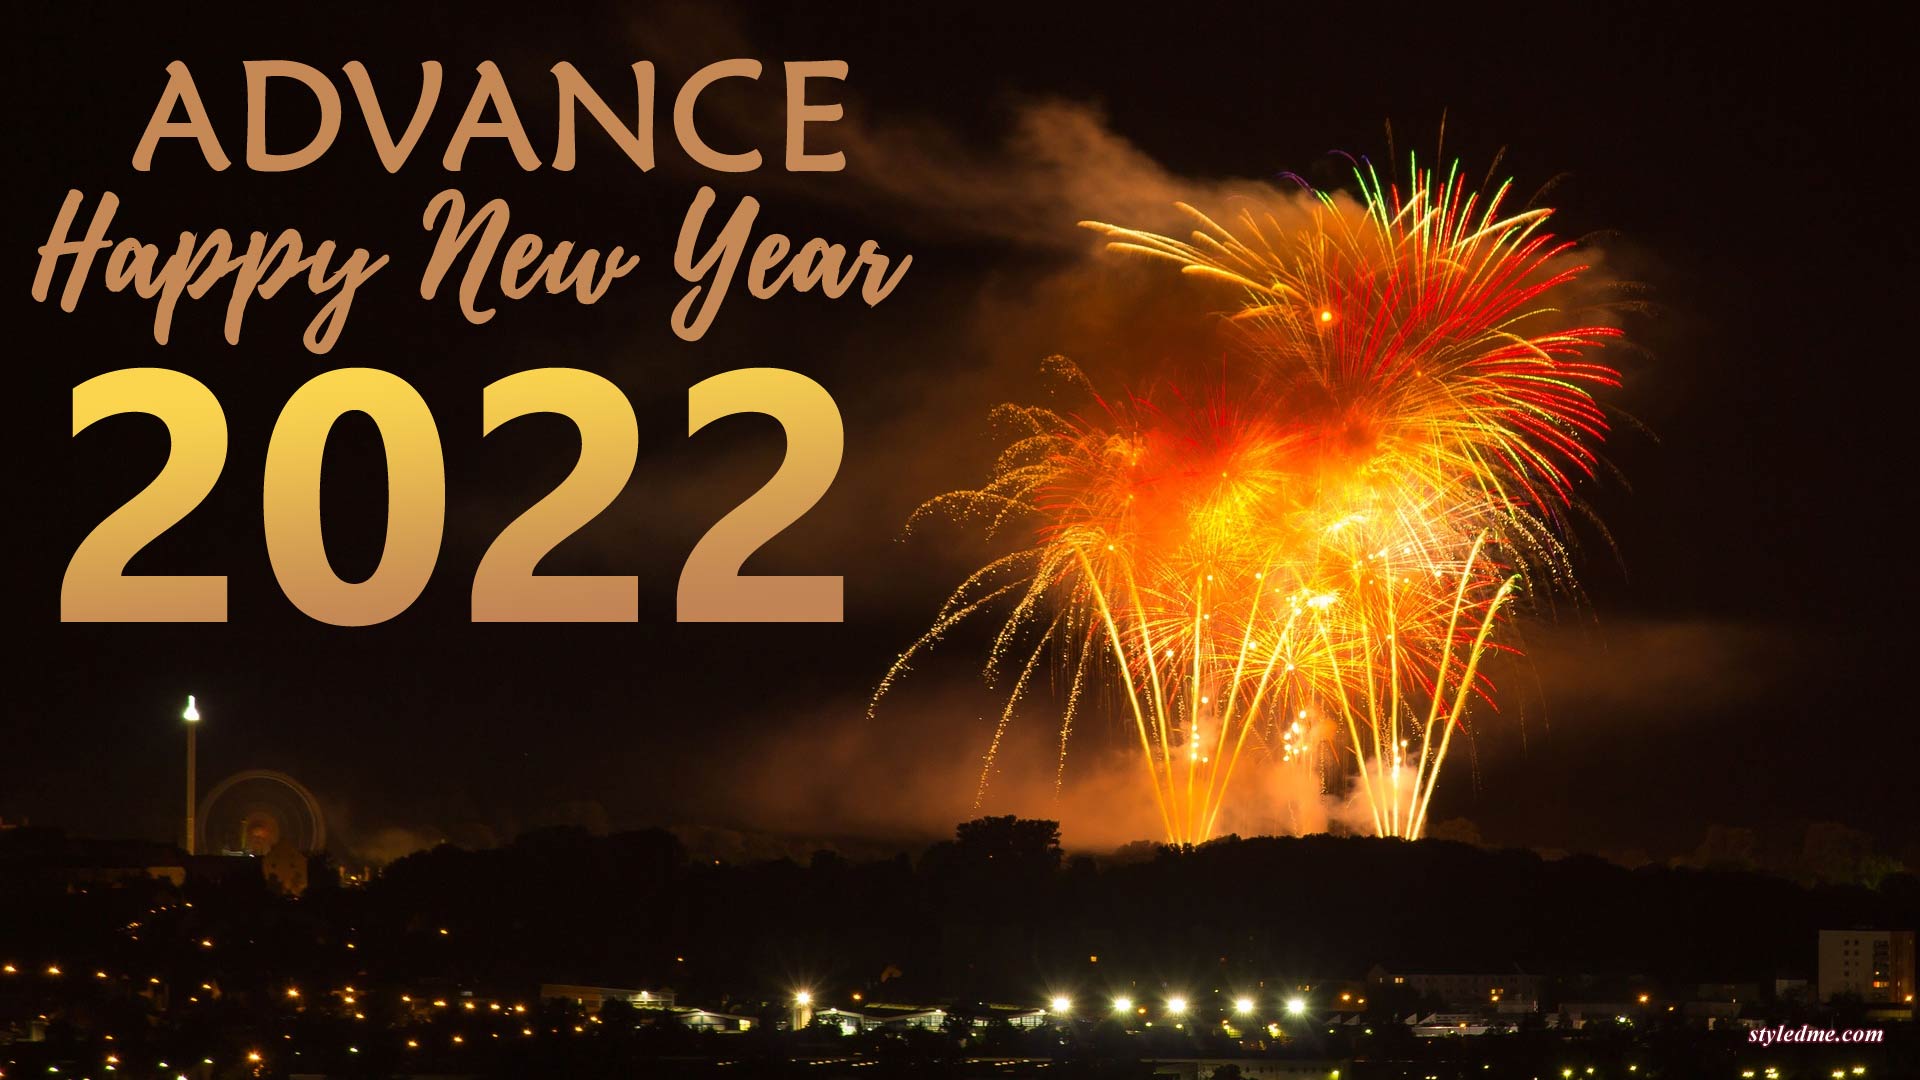 Advance happy New Year 2022 wallpaper free download HD pics photo